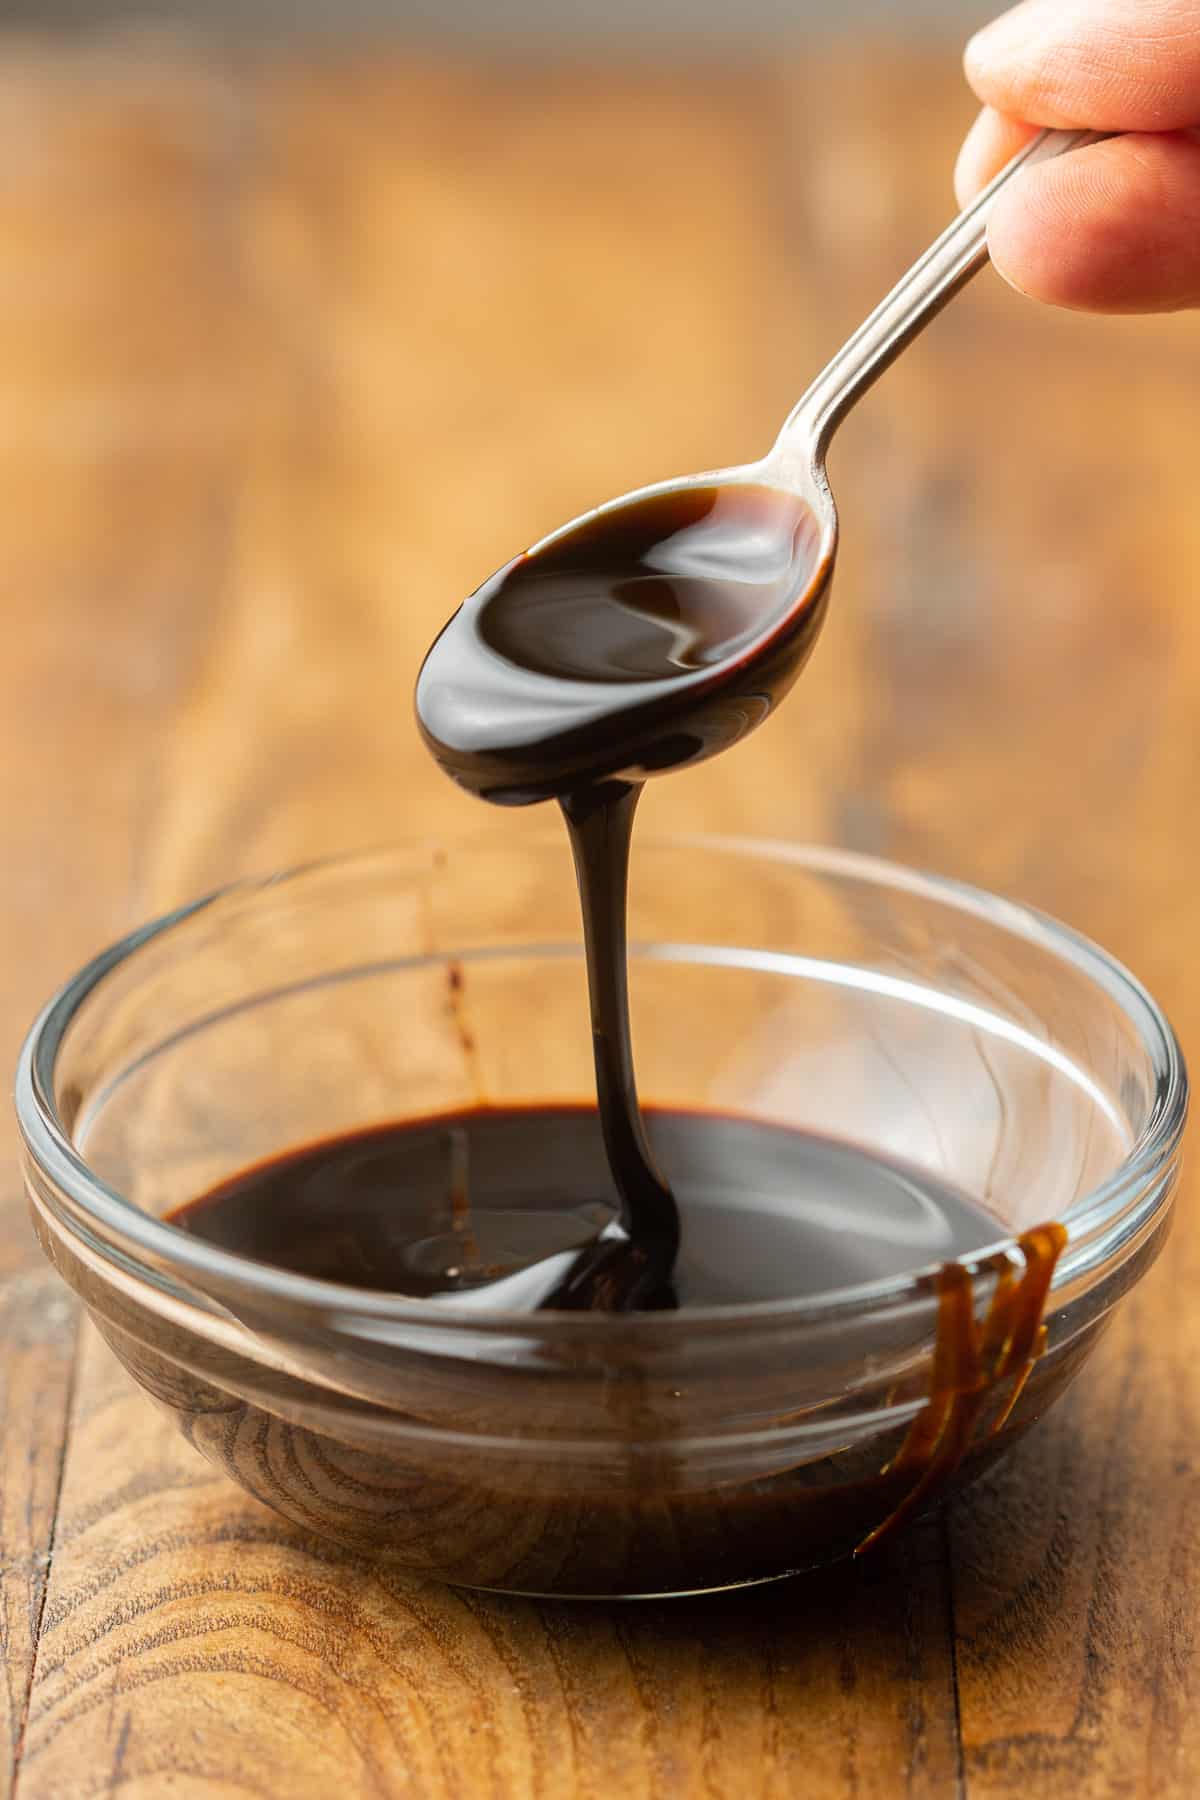 Spoon drizzling blackstrap molasses into a glass bowl.